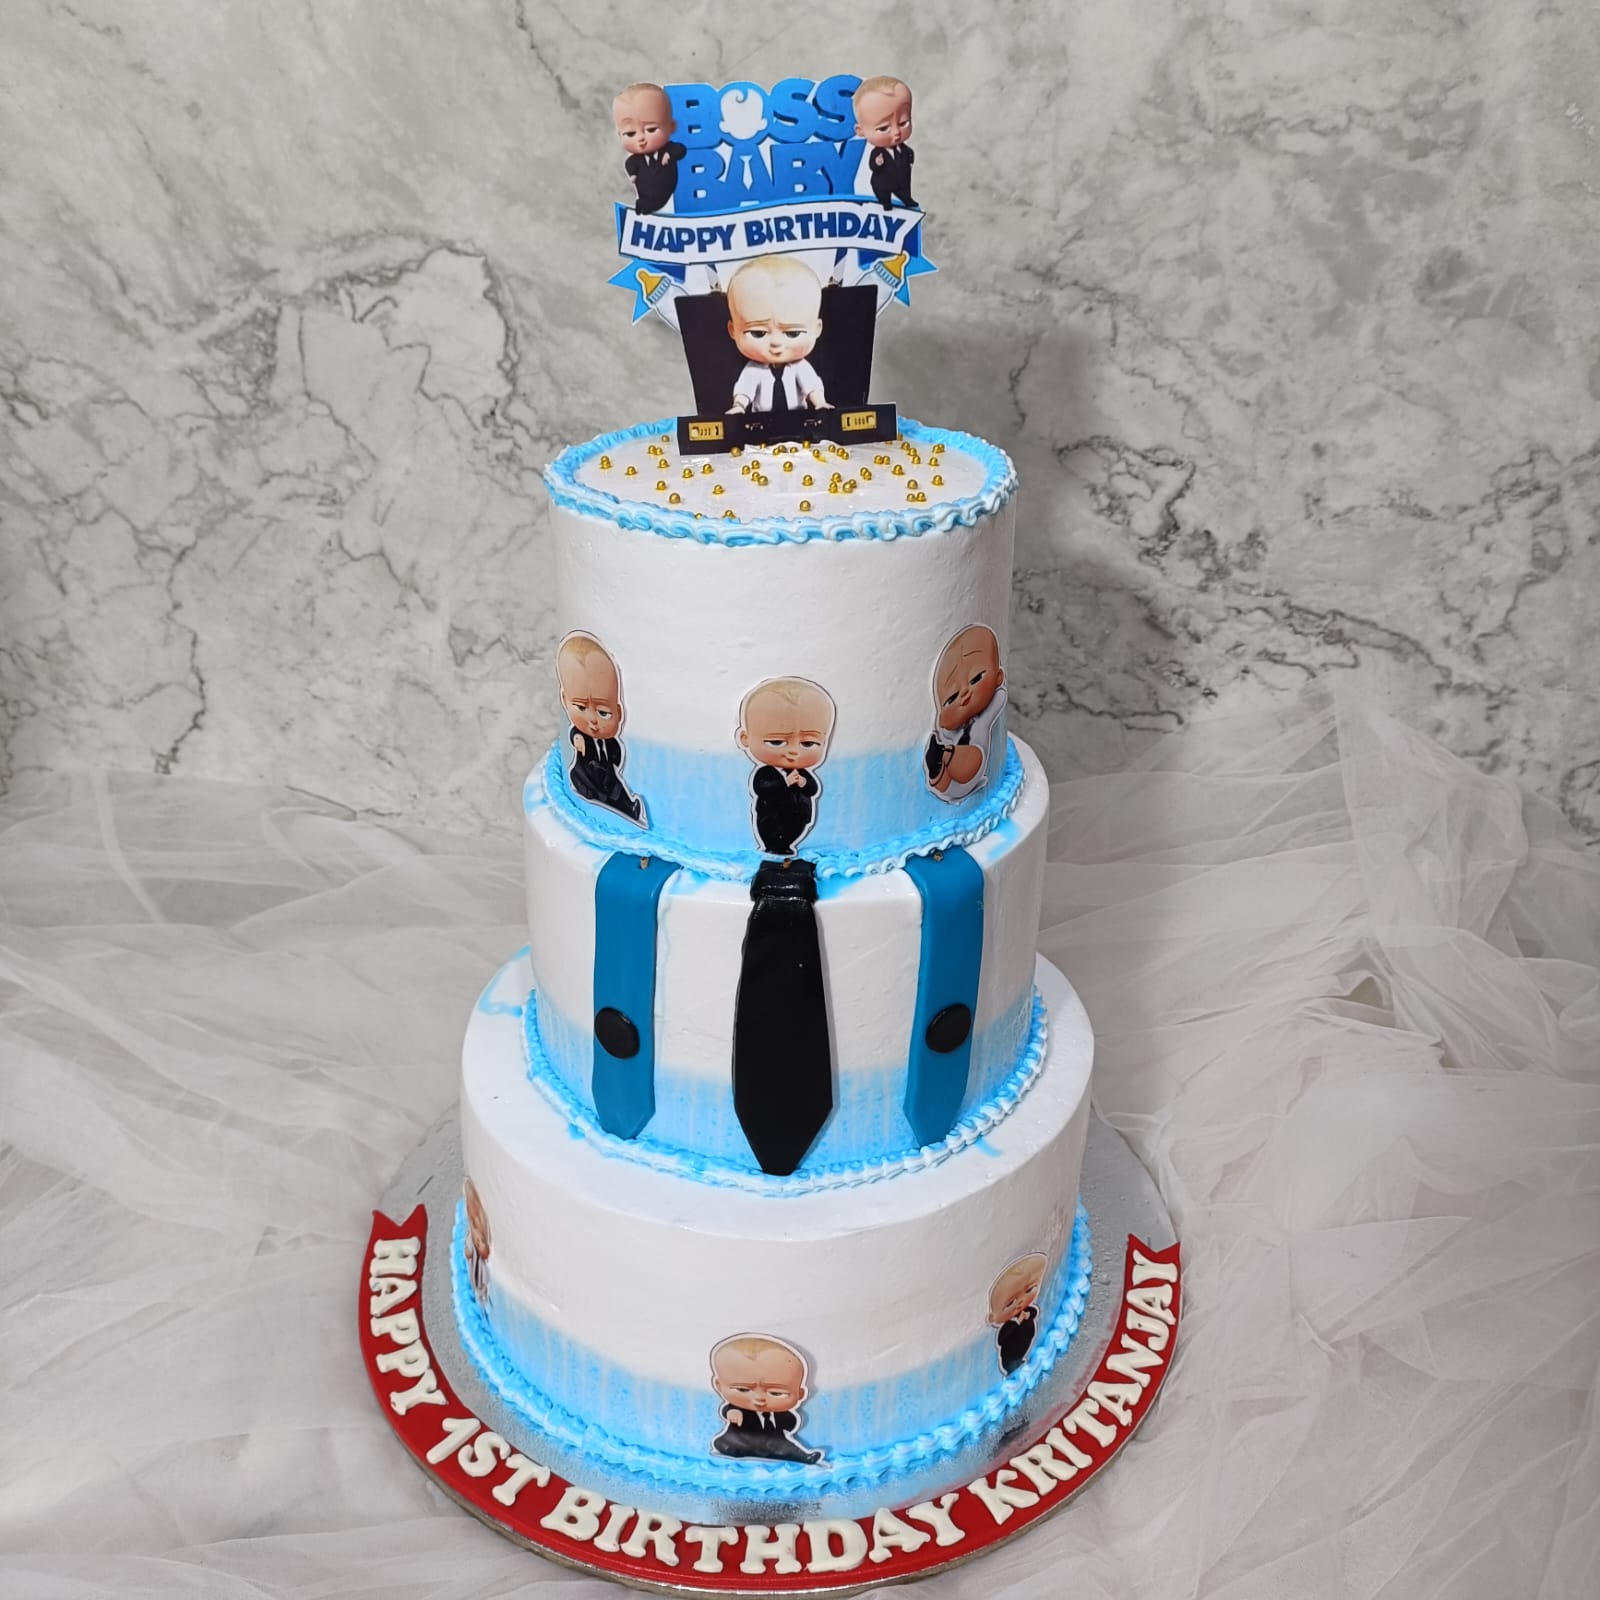 Details more than 84 cake design for boss - in.daotaonec